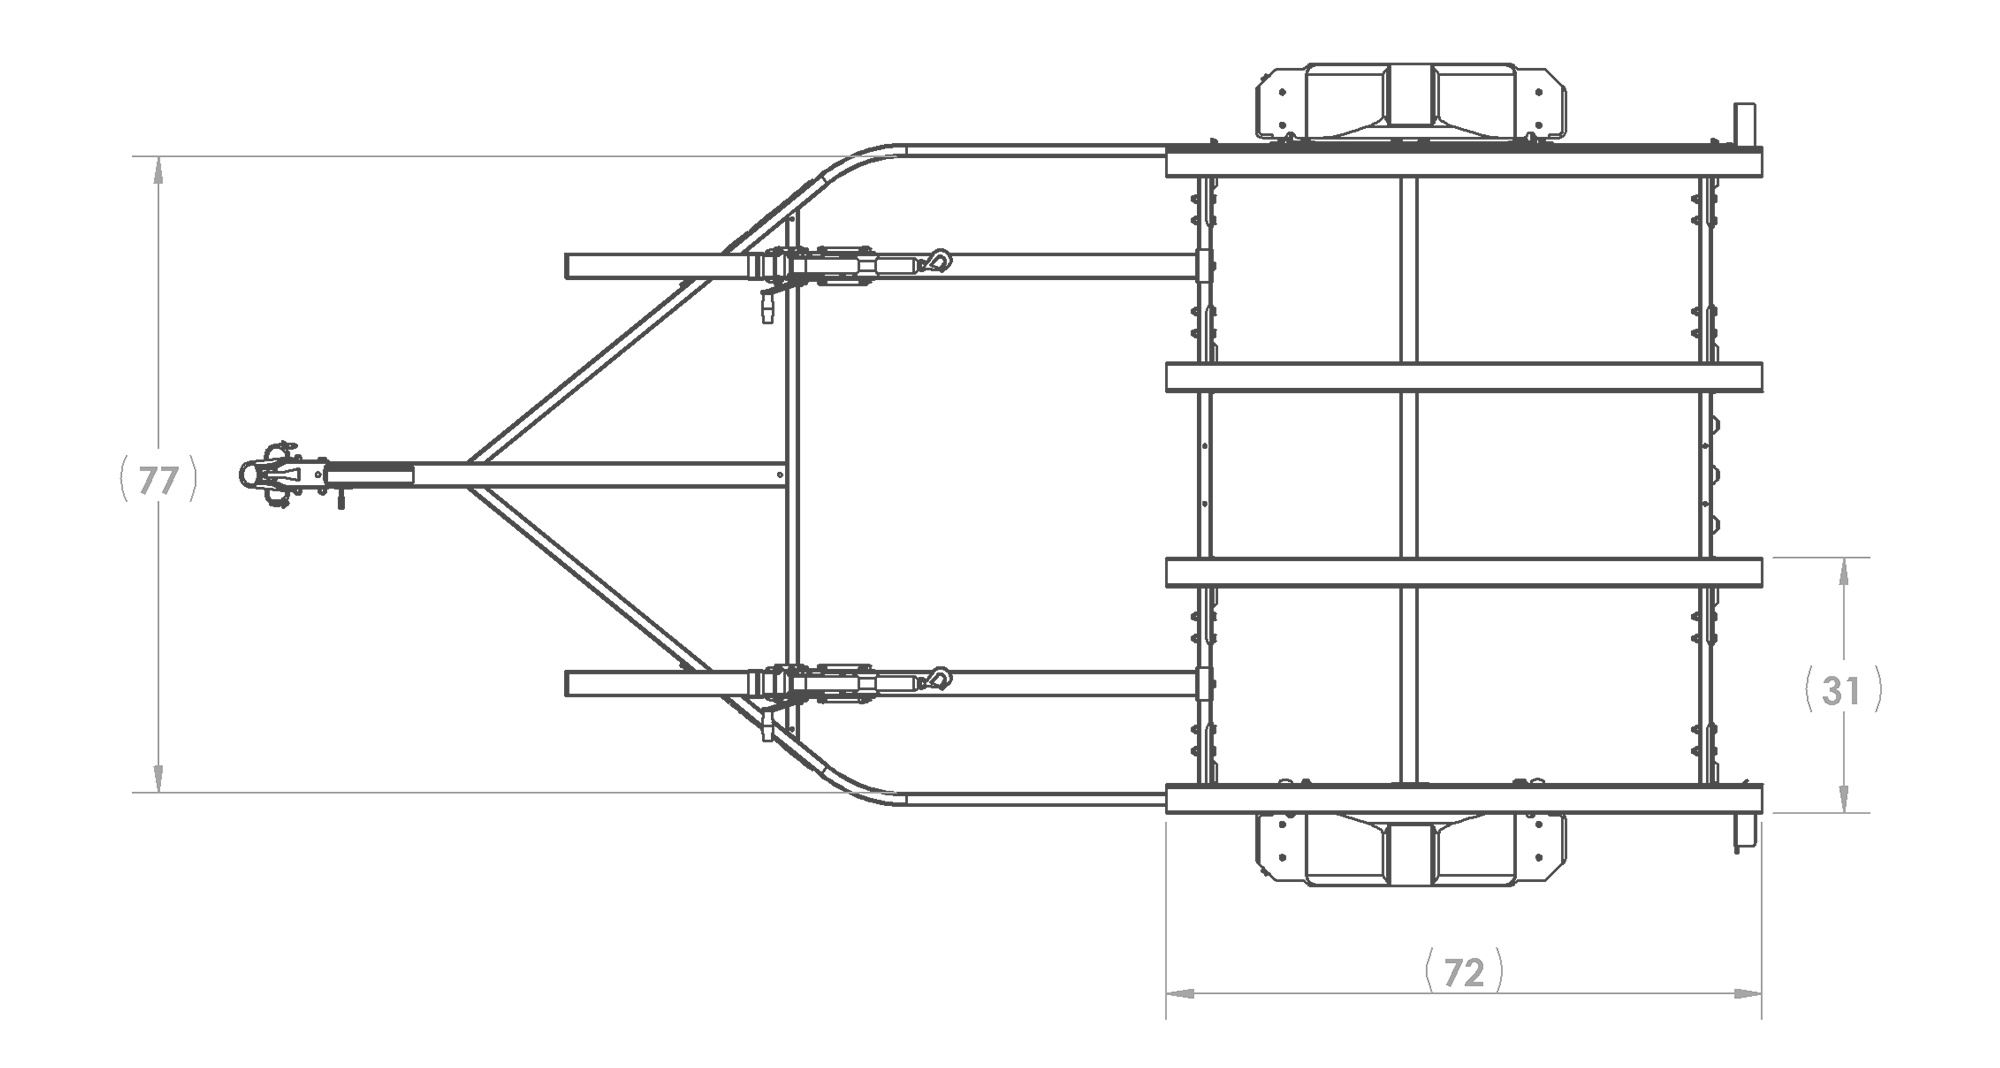 Karavan Trailer's Heavy Duty Double Watercraft Steel Trailer w/Step Fender, model number WC-2450-84-L, Top View Measurement